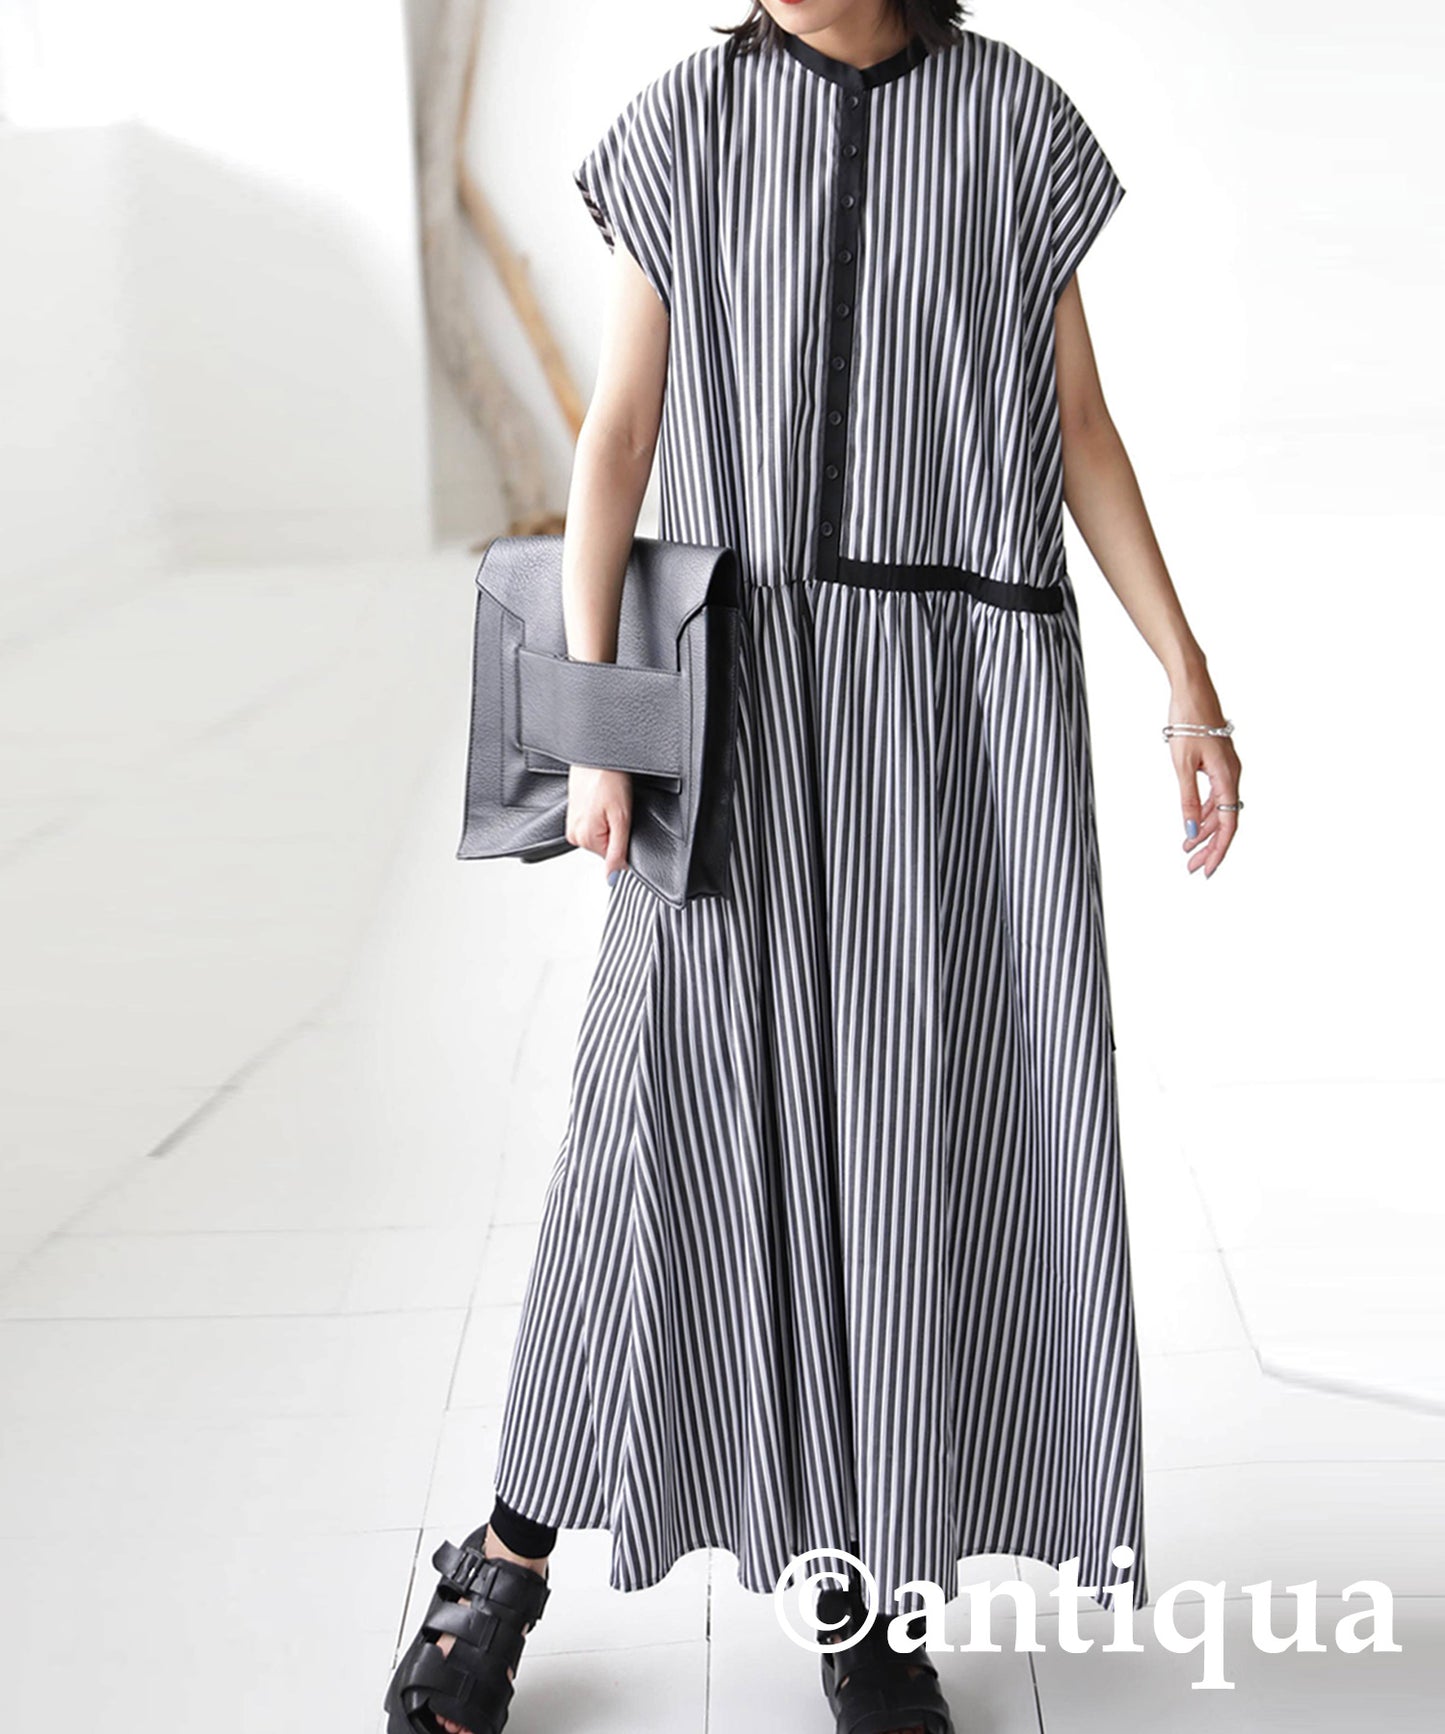 Stripe Pattern asymmetry drawstring Ladies casual dress